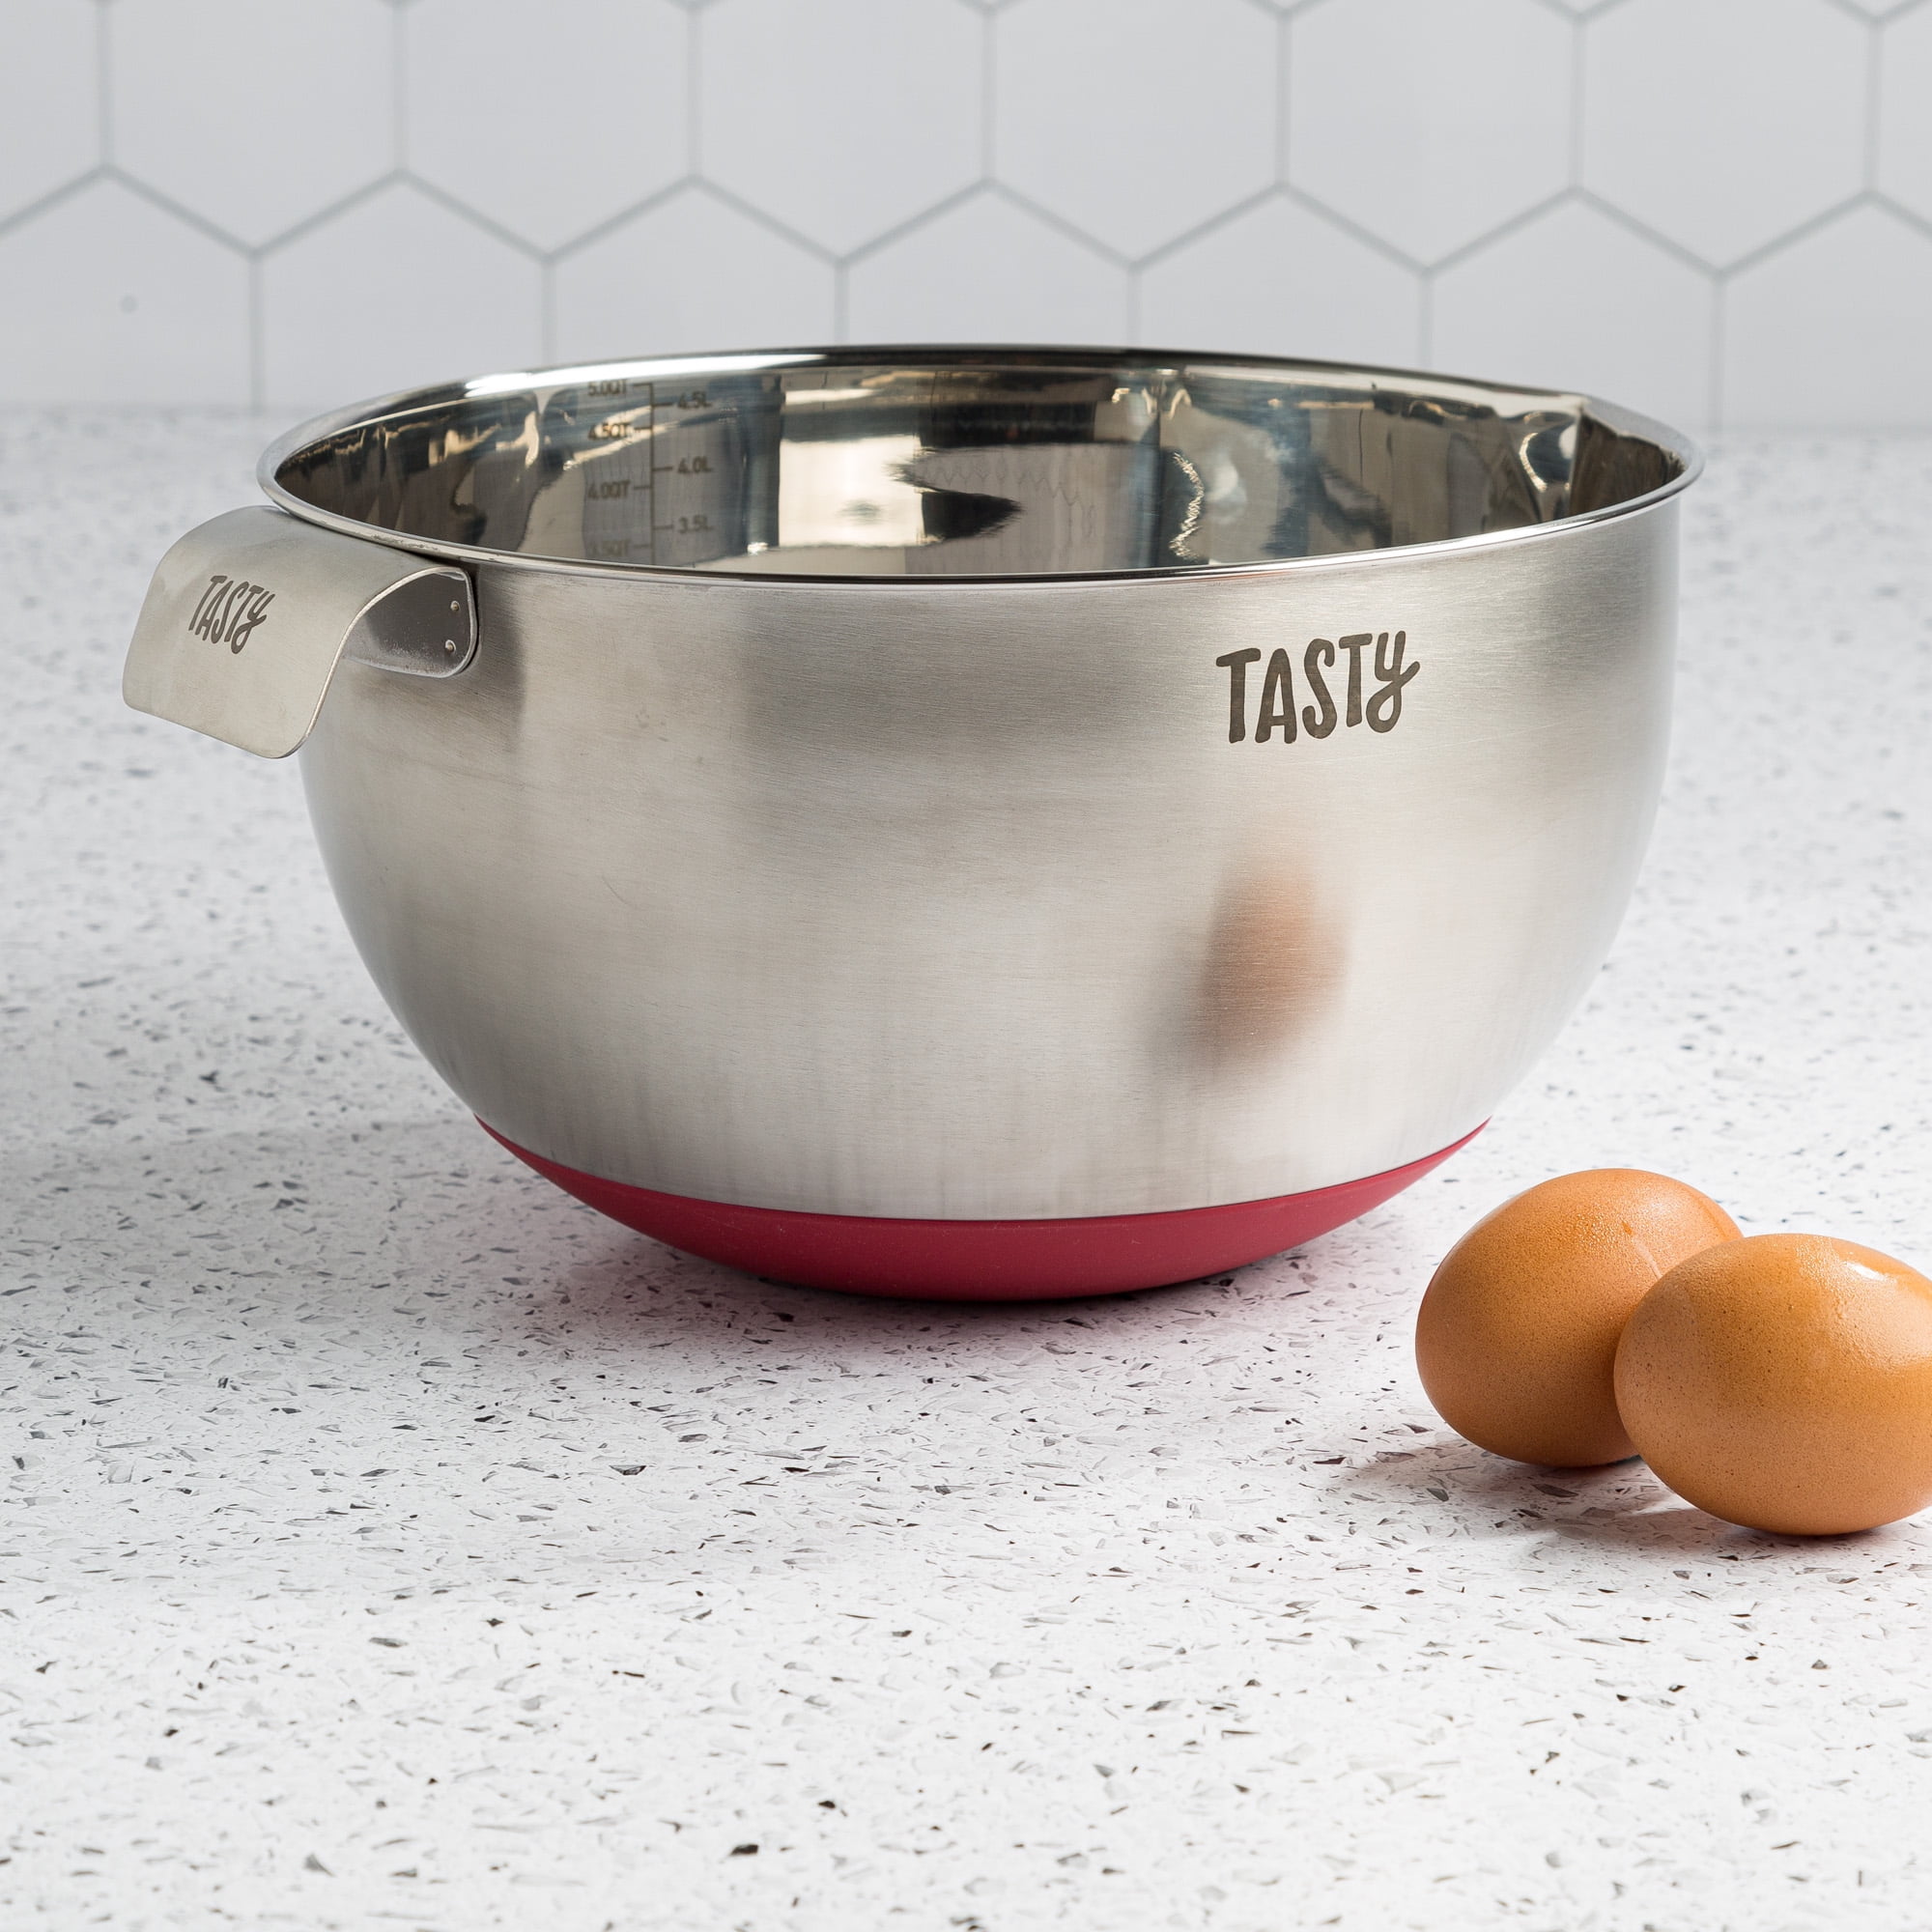 Tasty 15 Piece Baking Kitchen Gadget Set with Large Mixing Bowl